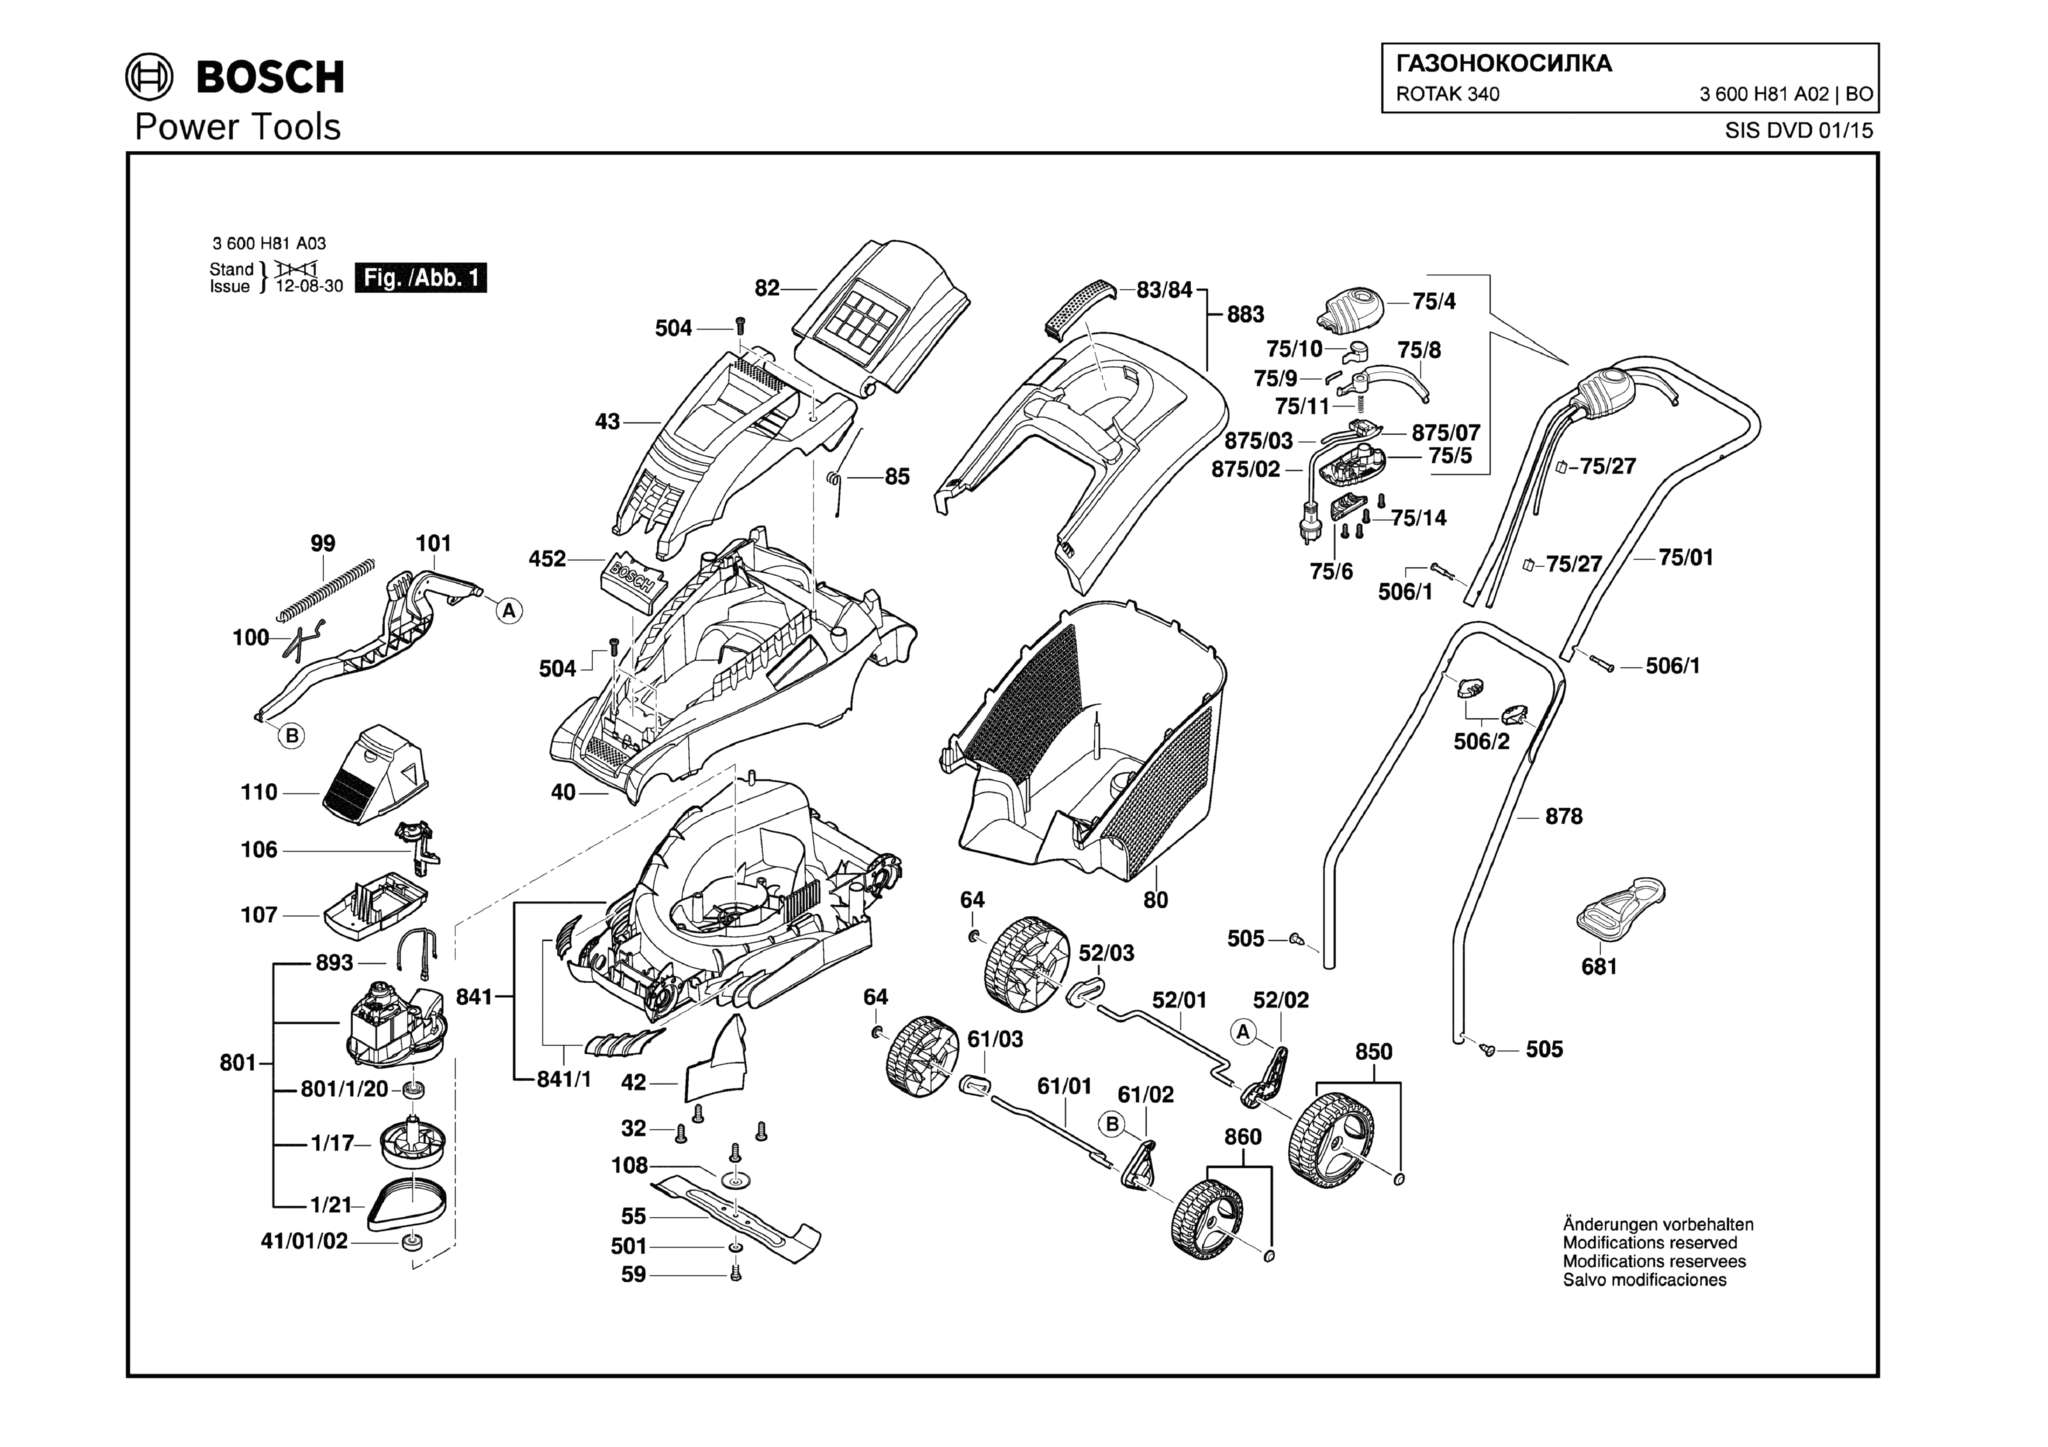 Запчасти, схема и деталировка Bosch ROTAK 340 (ТИП 3600H81A02)